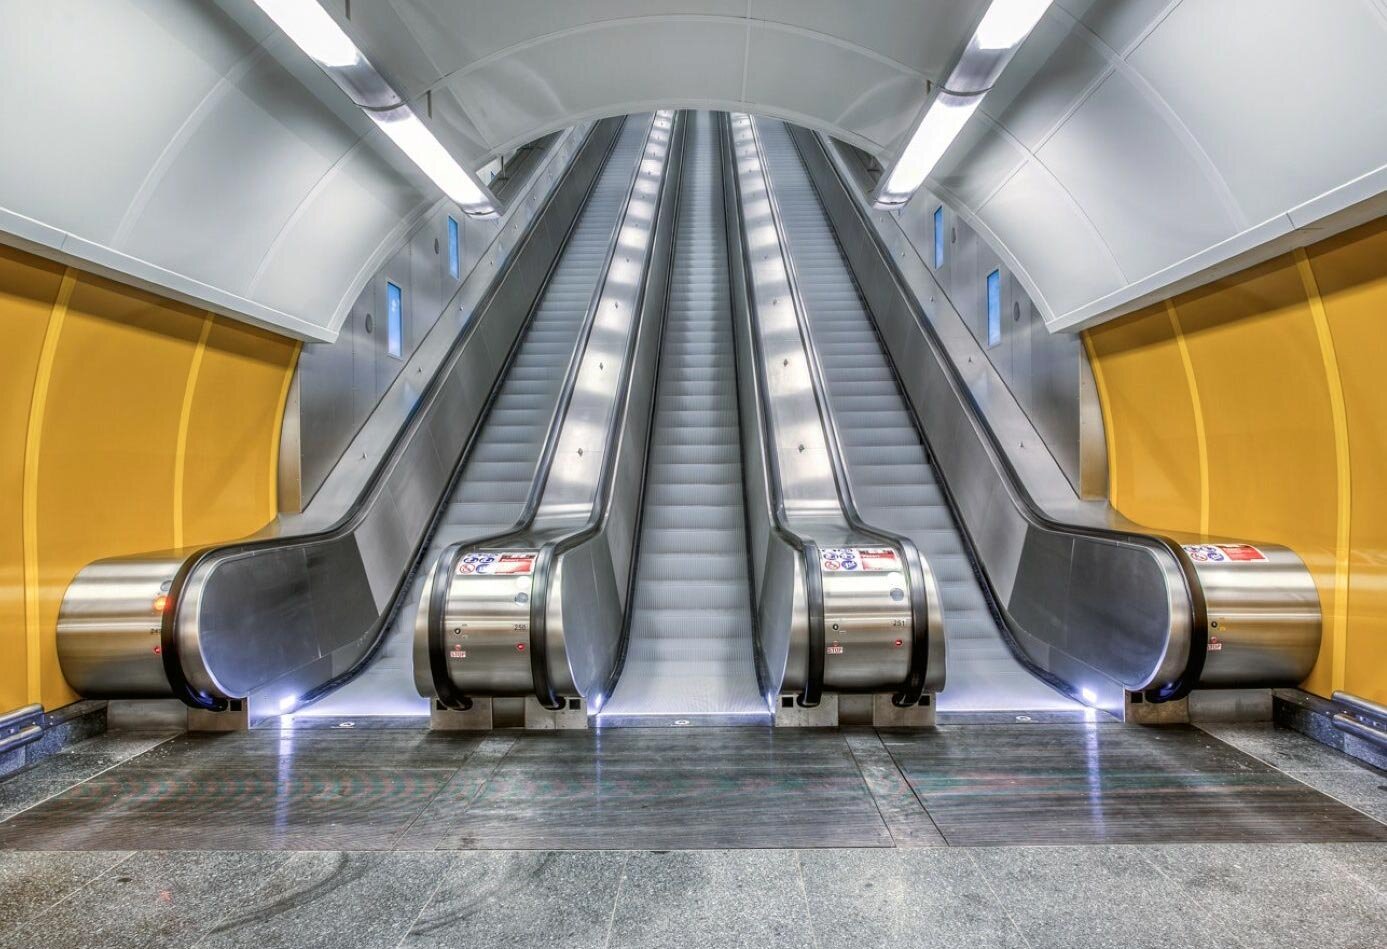   Metro station in Prague, Czech Republic  